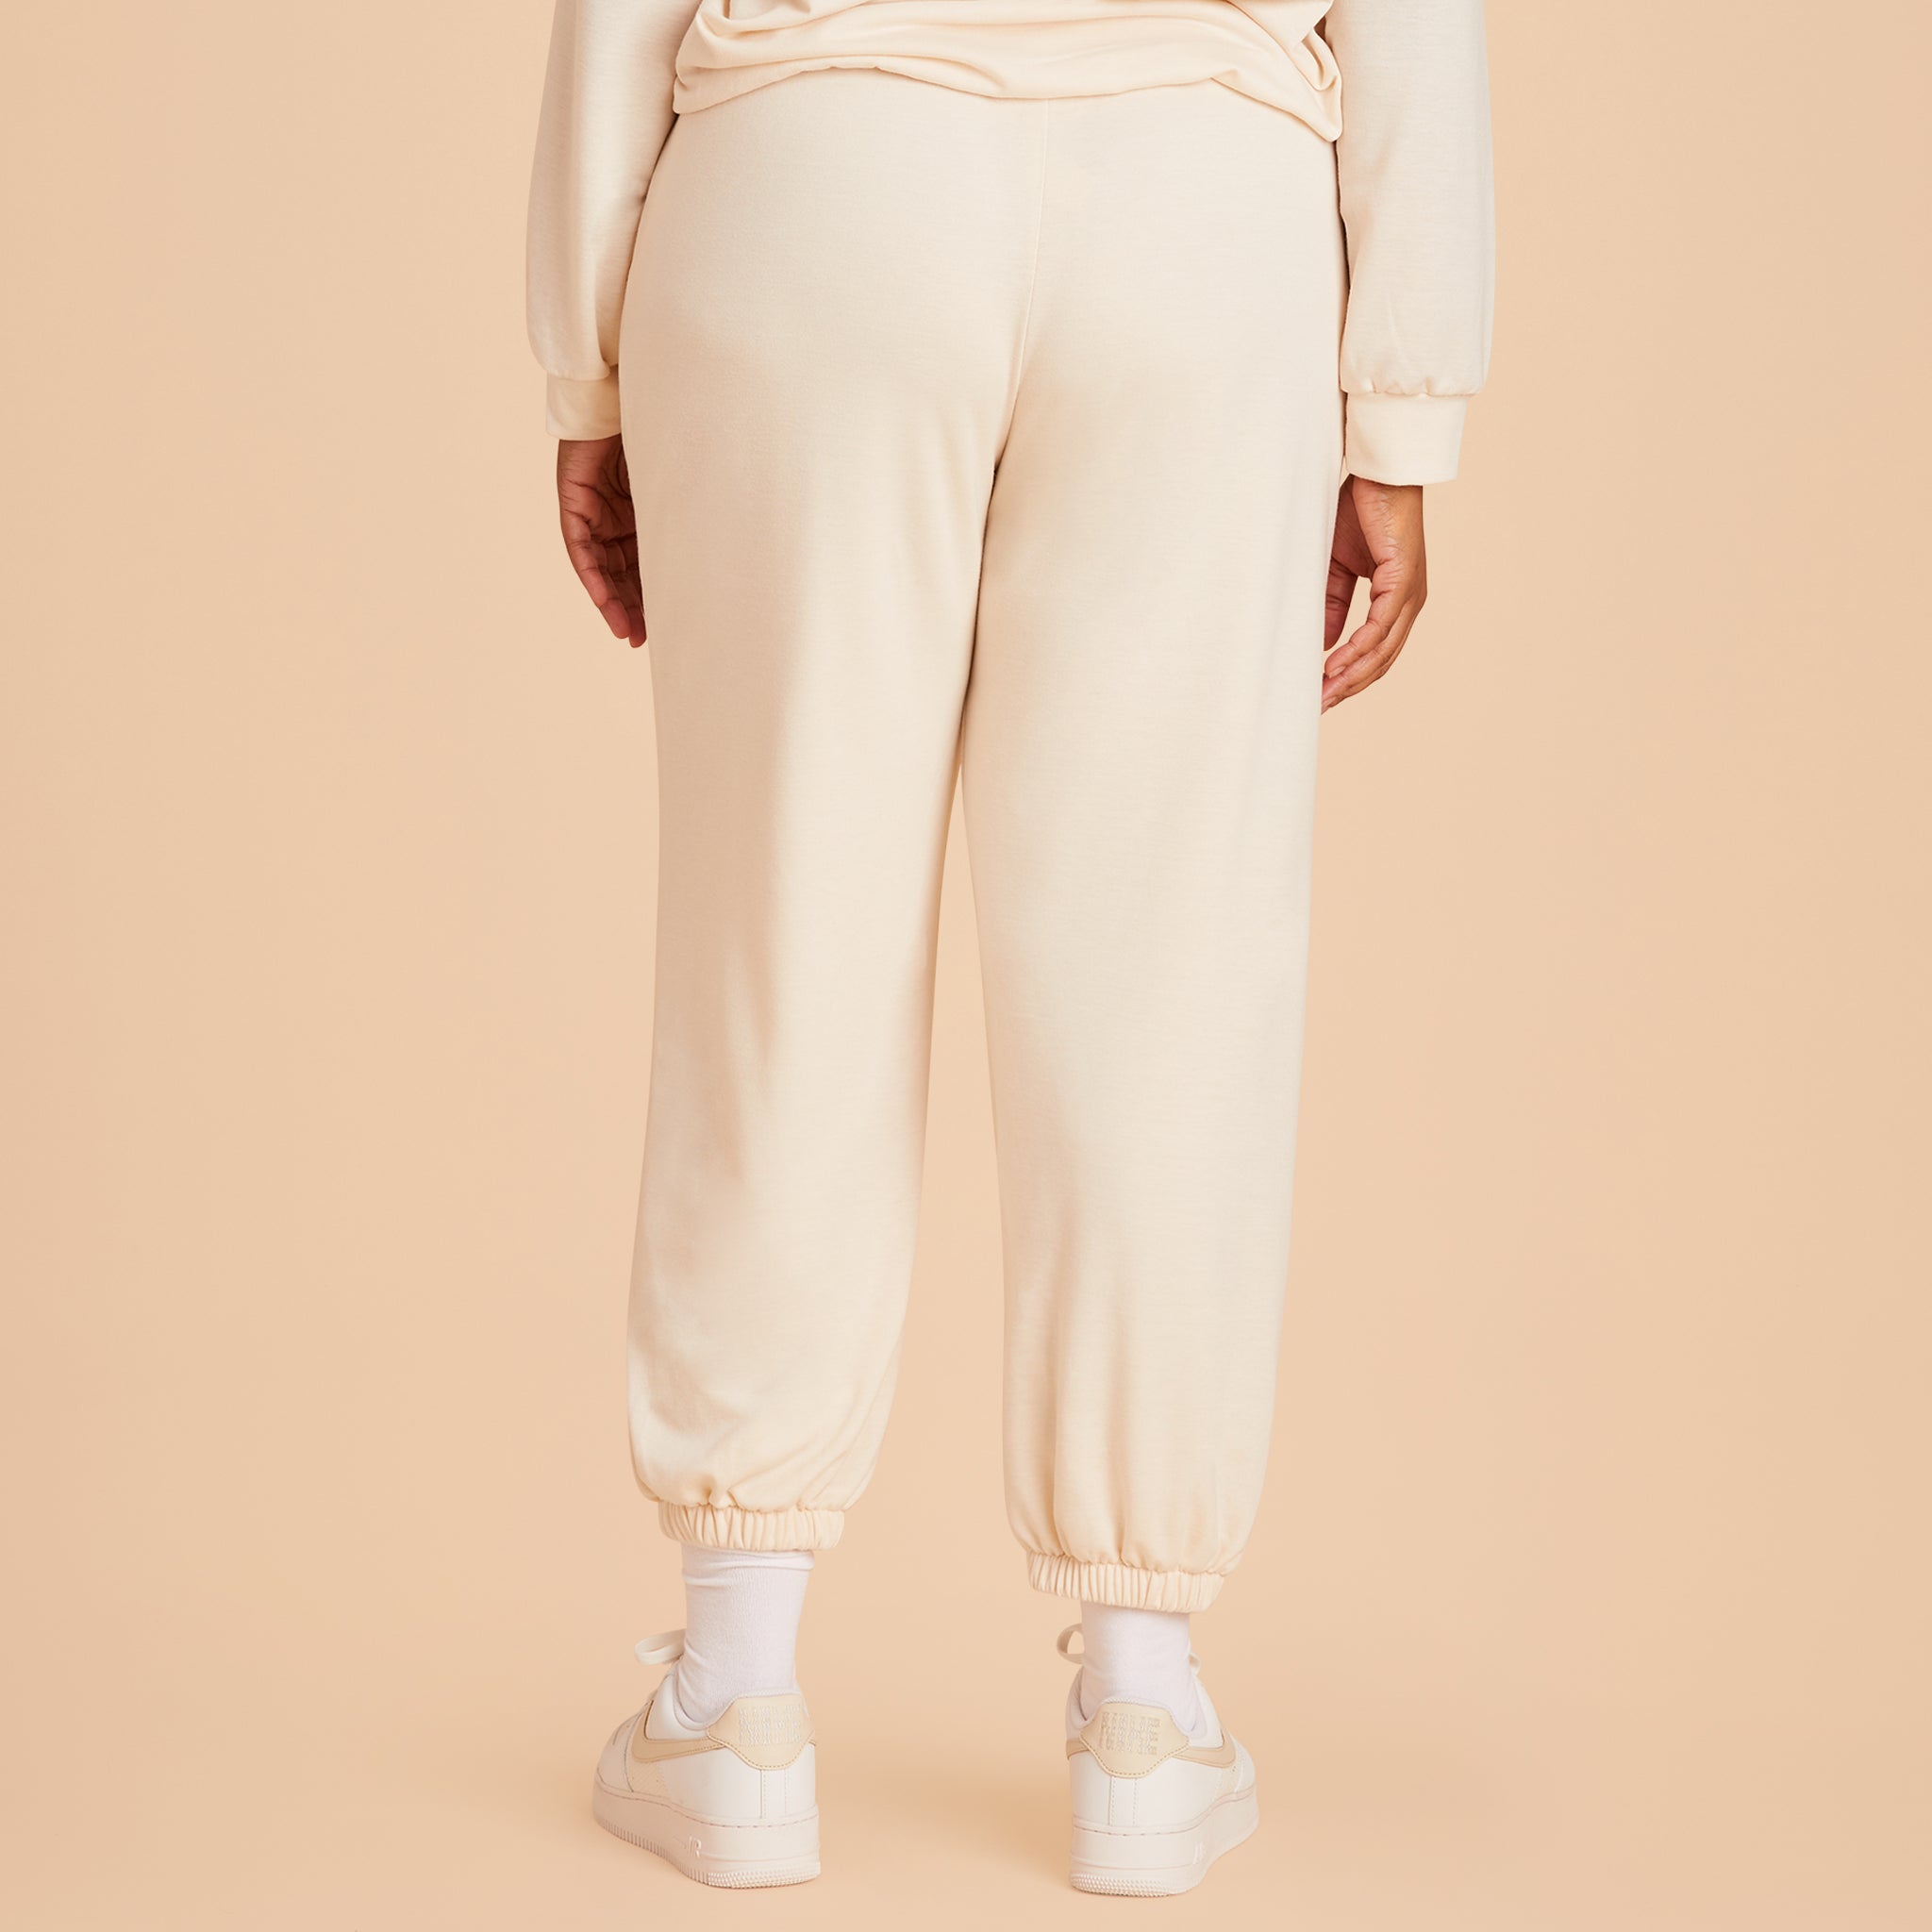 Plus Size Monogram sweatpants in vanilla cream back view